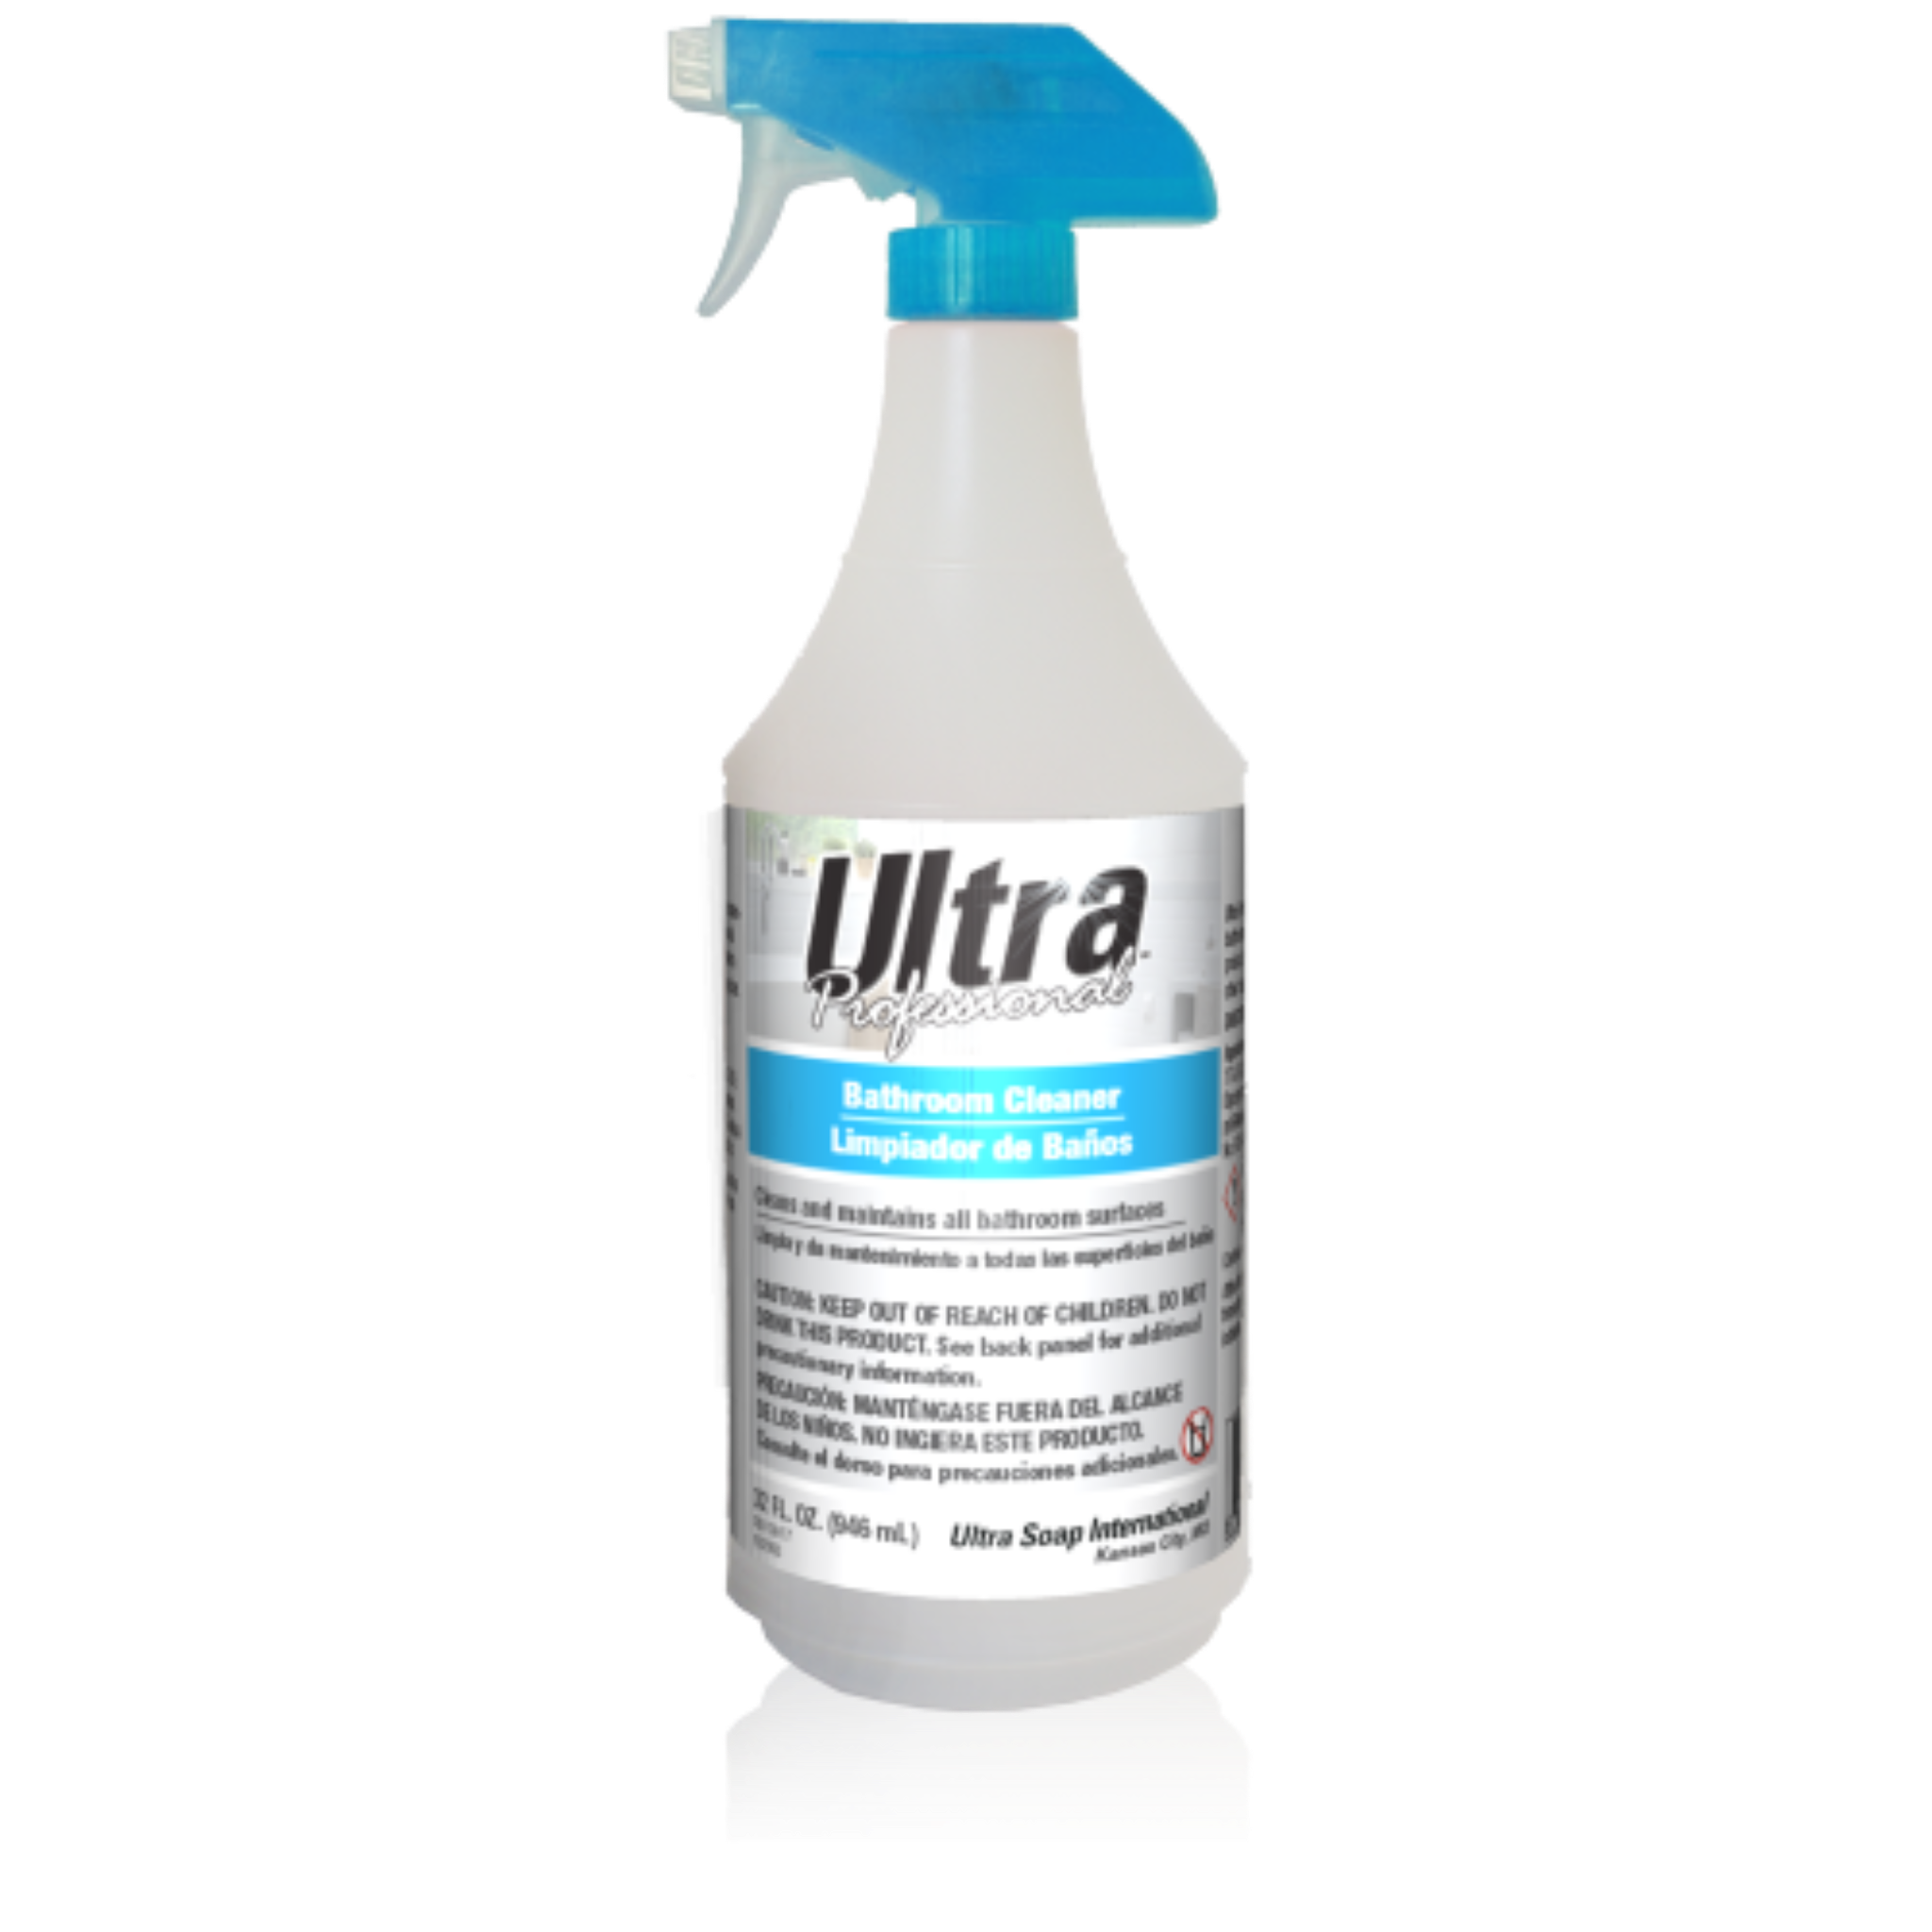 Ultra Professional Bathroom Cleaner - 12x32 Ounce Dispenser